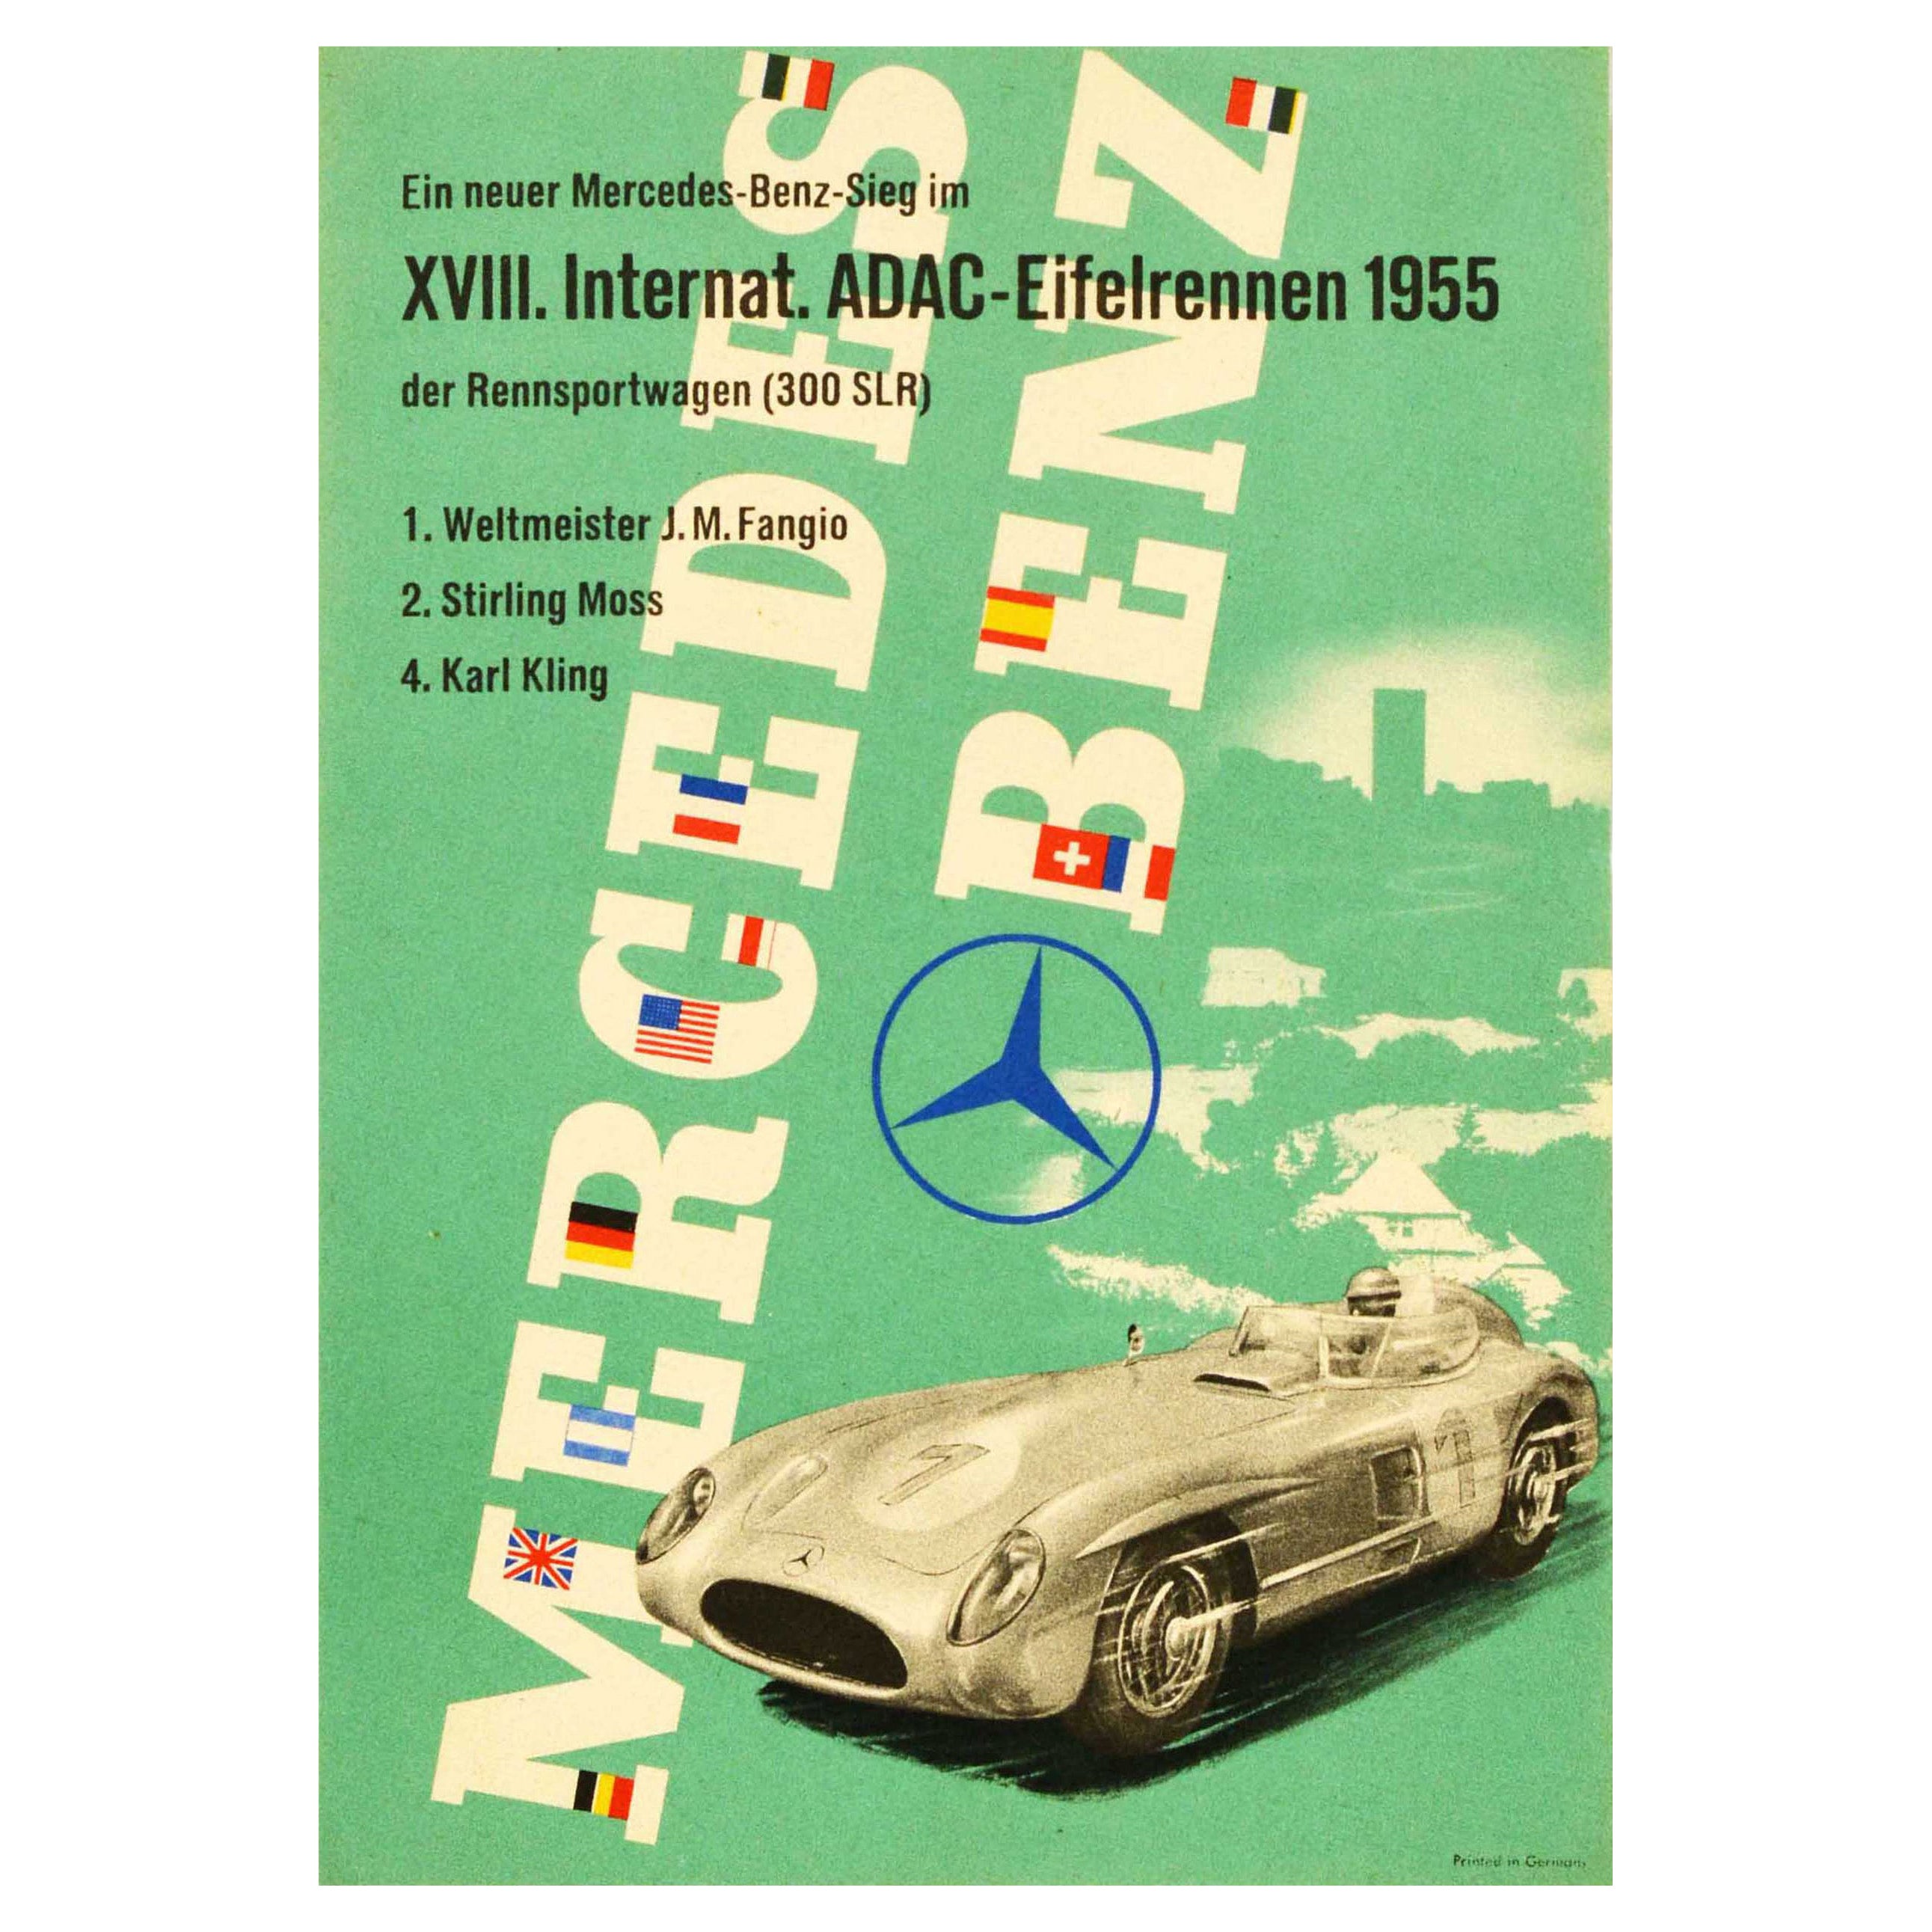 Original Vintage Motorsport Poster Mercedes Benz Victory ADAC 1955 300SLR Fangio For Sale